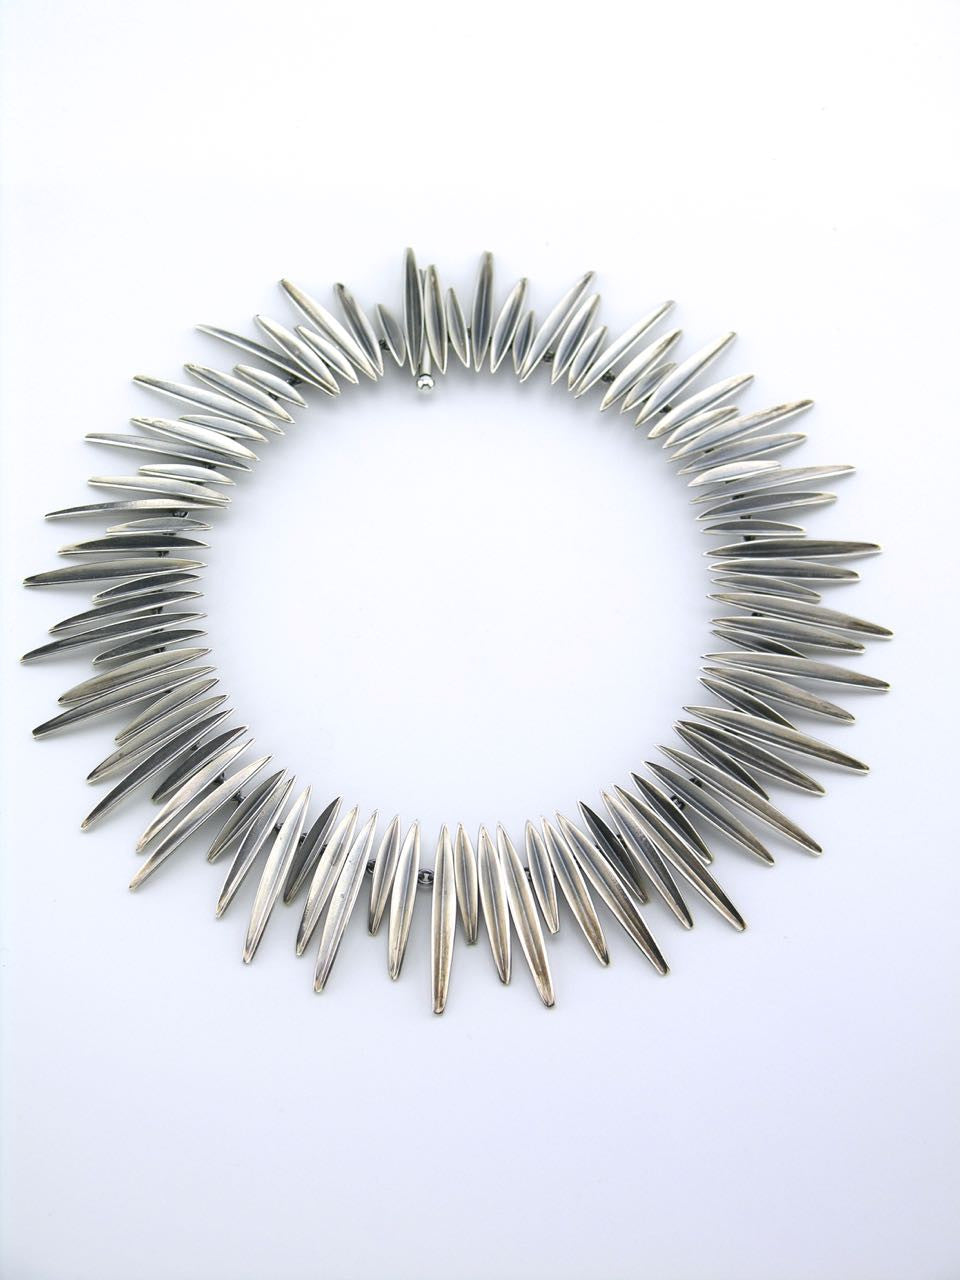 Vintage Anton Michelsen silver modernist "Grass" motif necklace